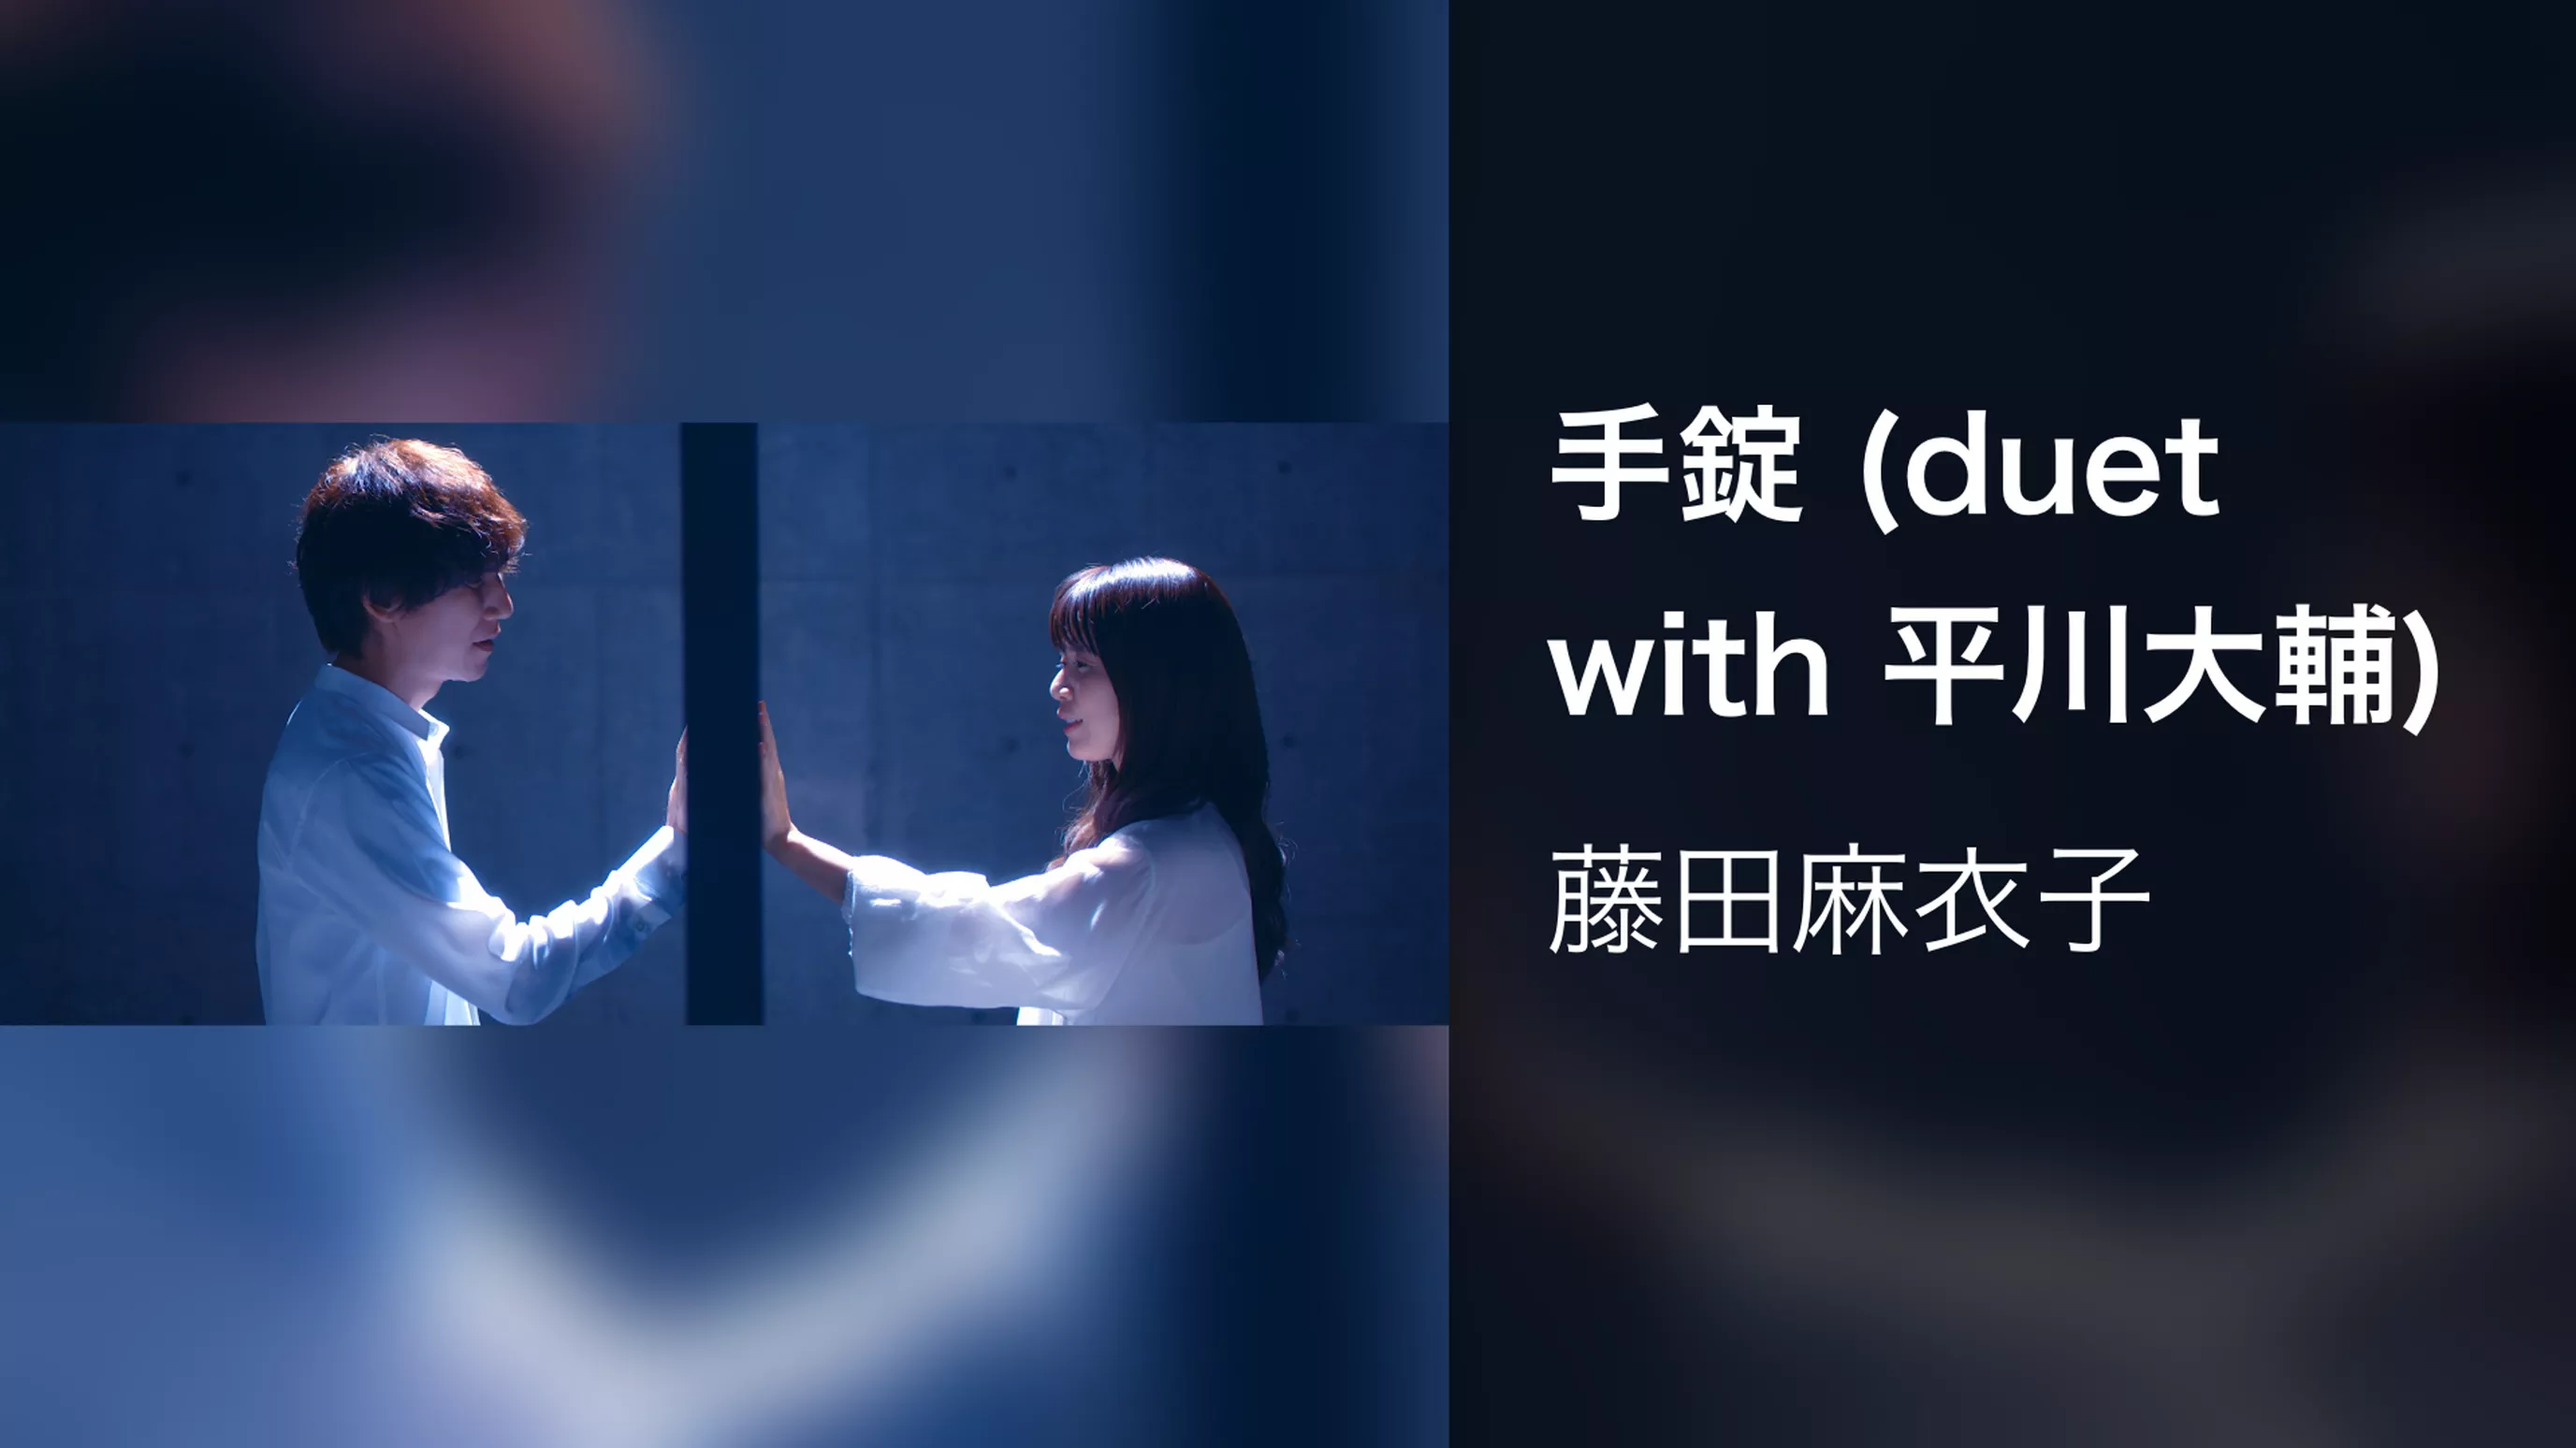 手錠 (duet with 平川大輔)